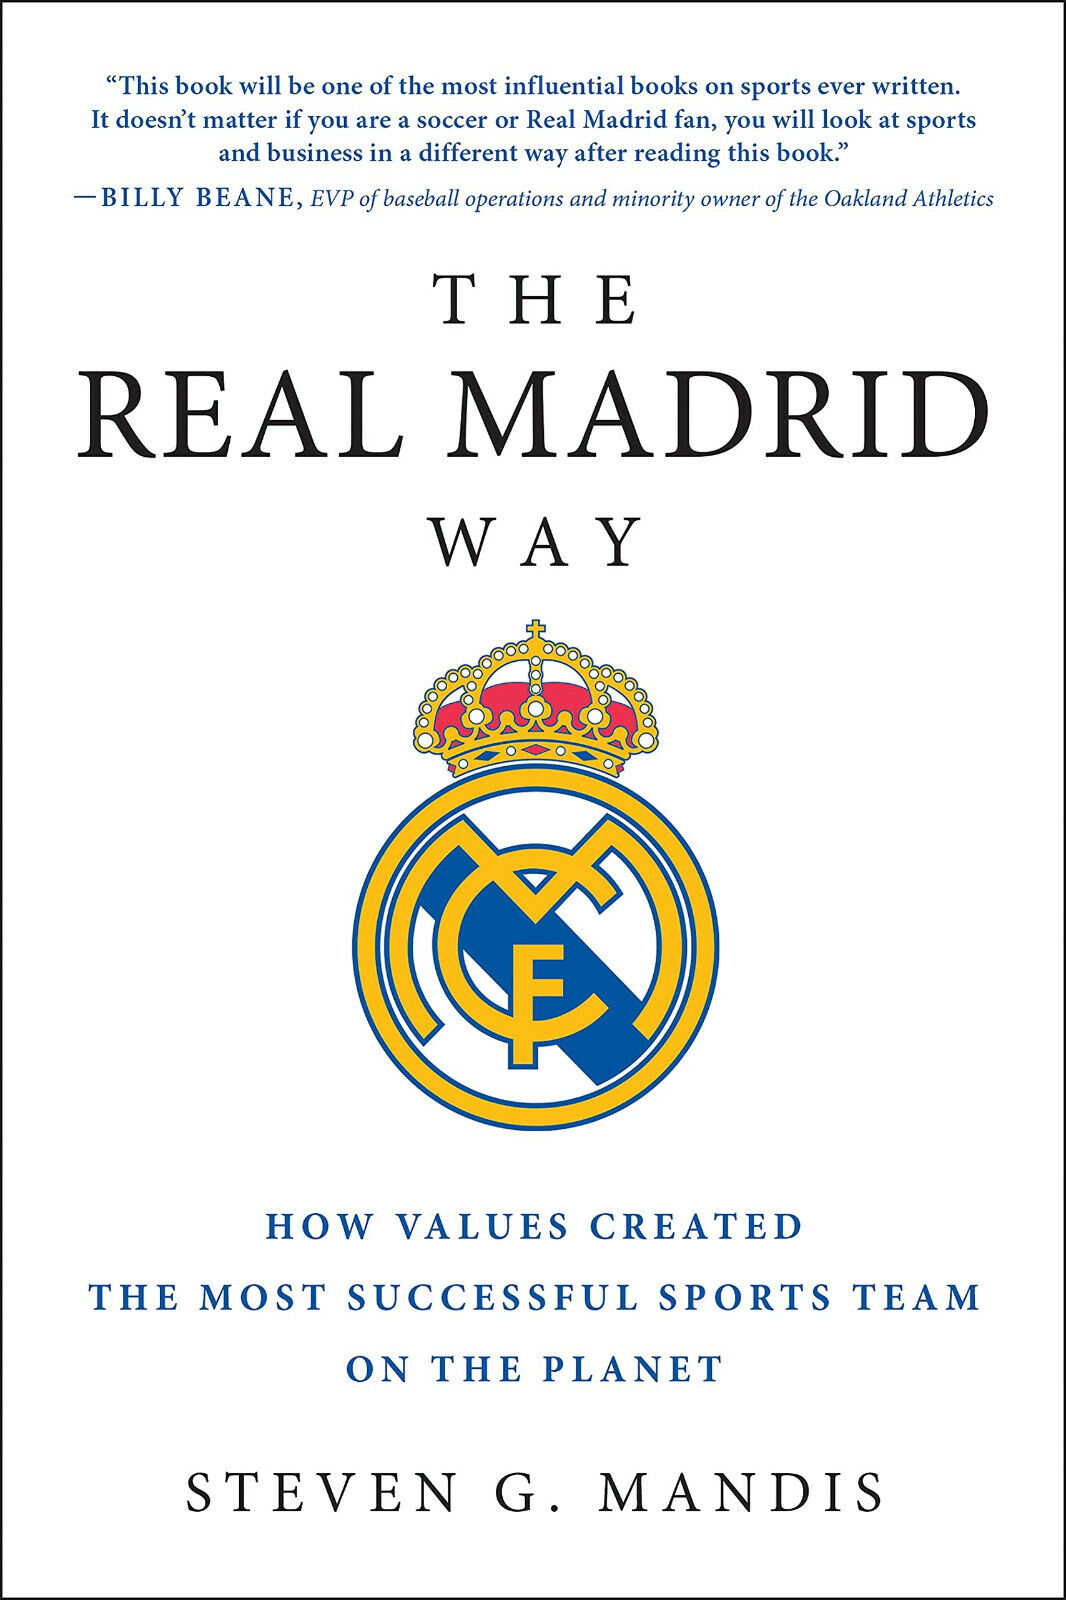 The Real Madrid Way - Steven G. Mandis - BenBella Books, 2016